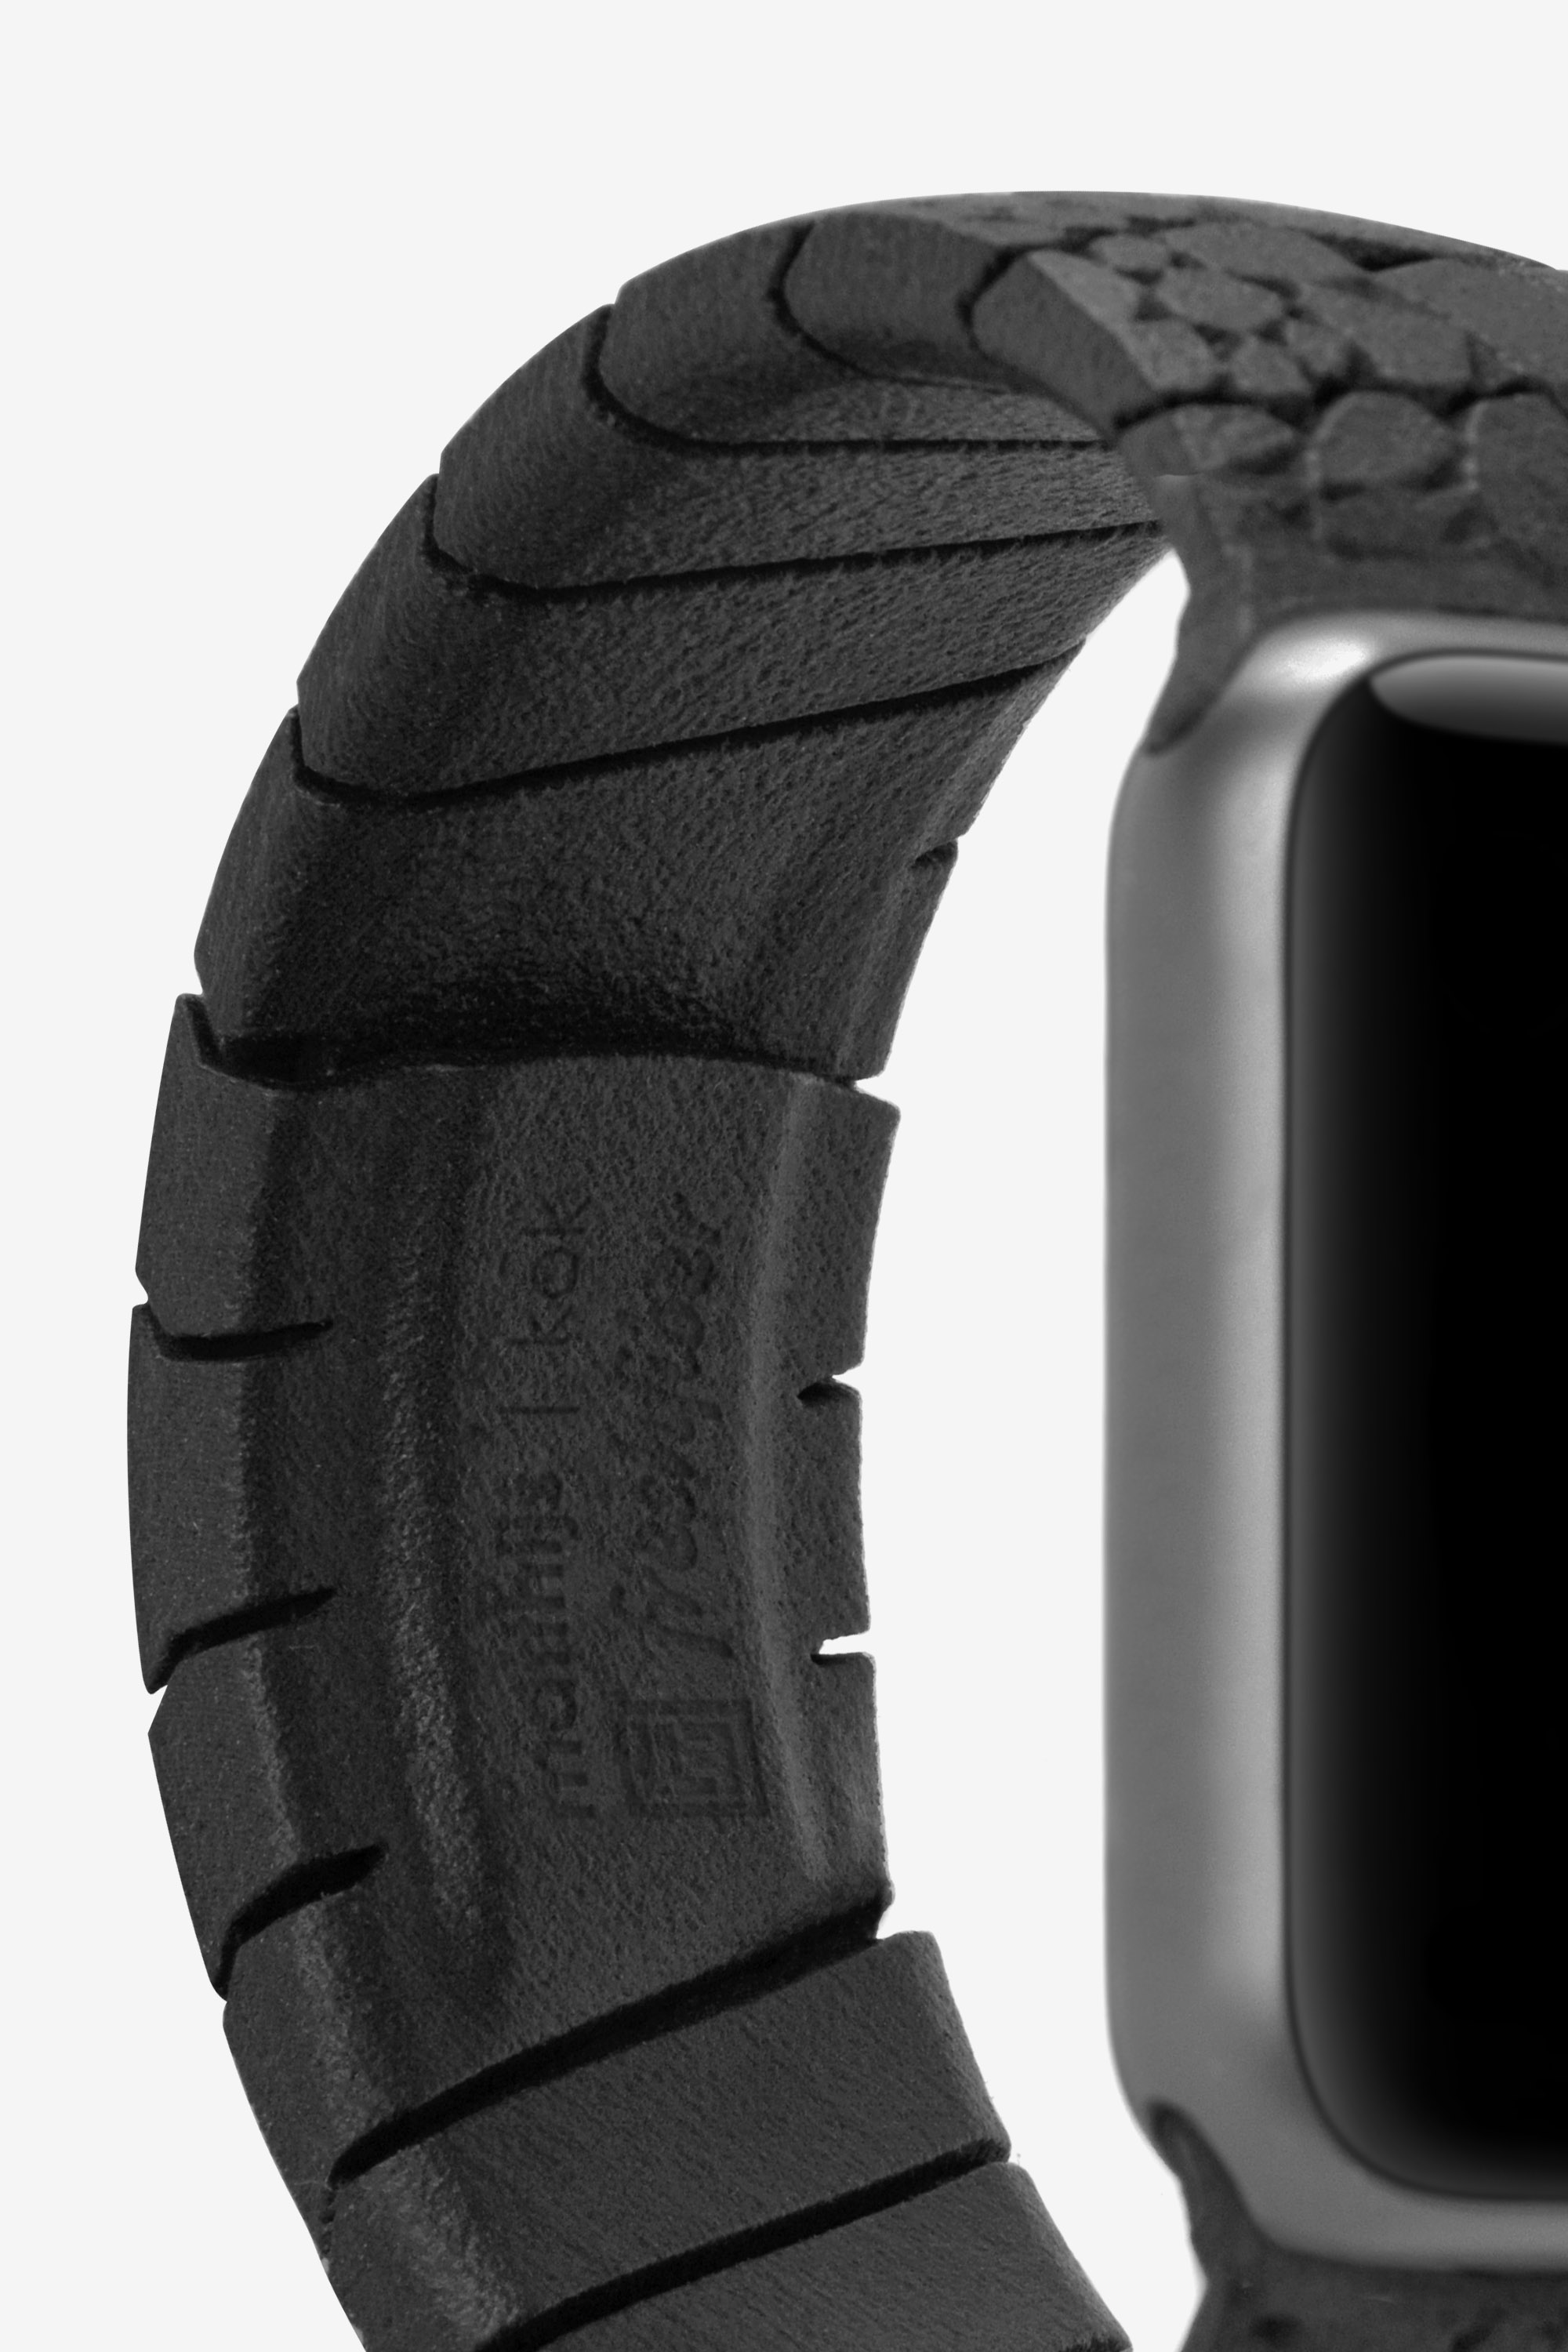 Wristband Detail | Freshfiber Apple Watch Bands, Design by Matthijs Kok for Freshfiber